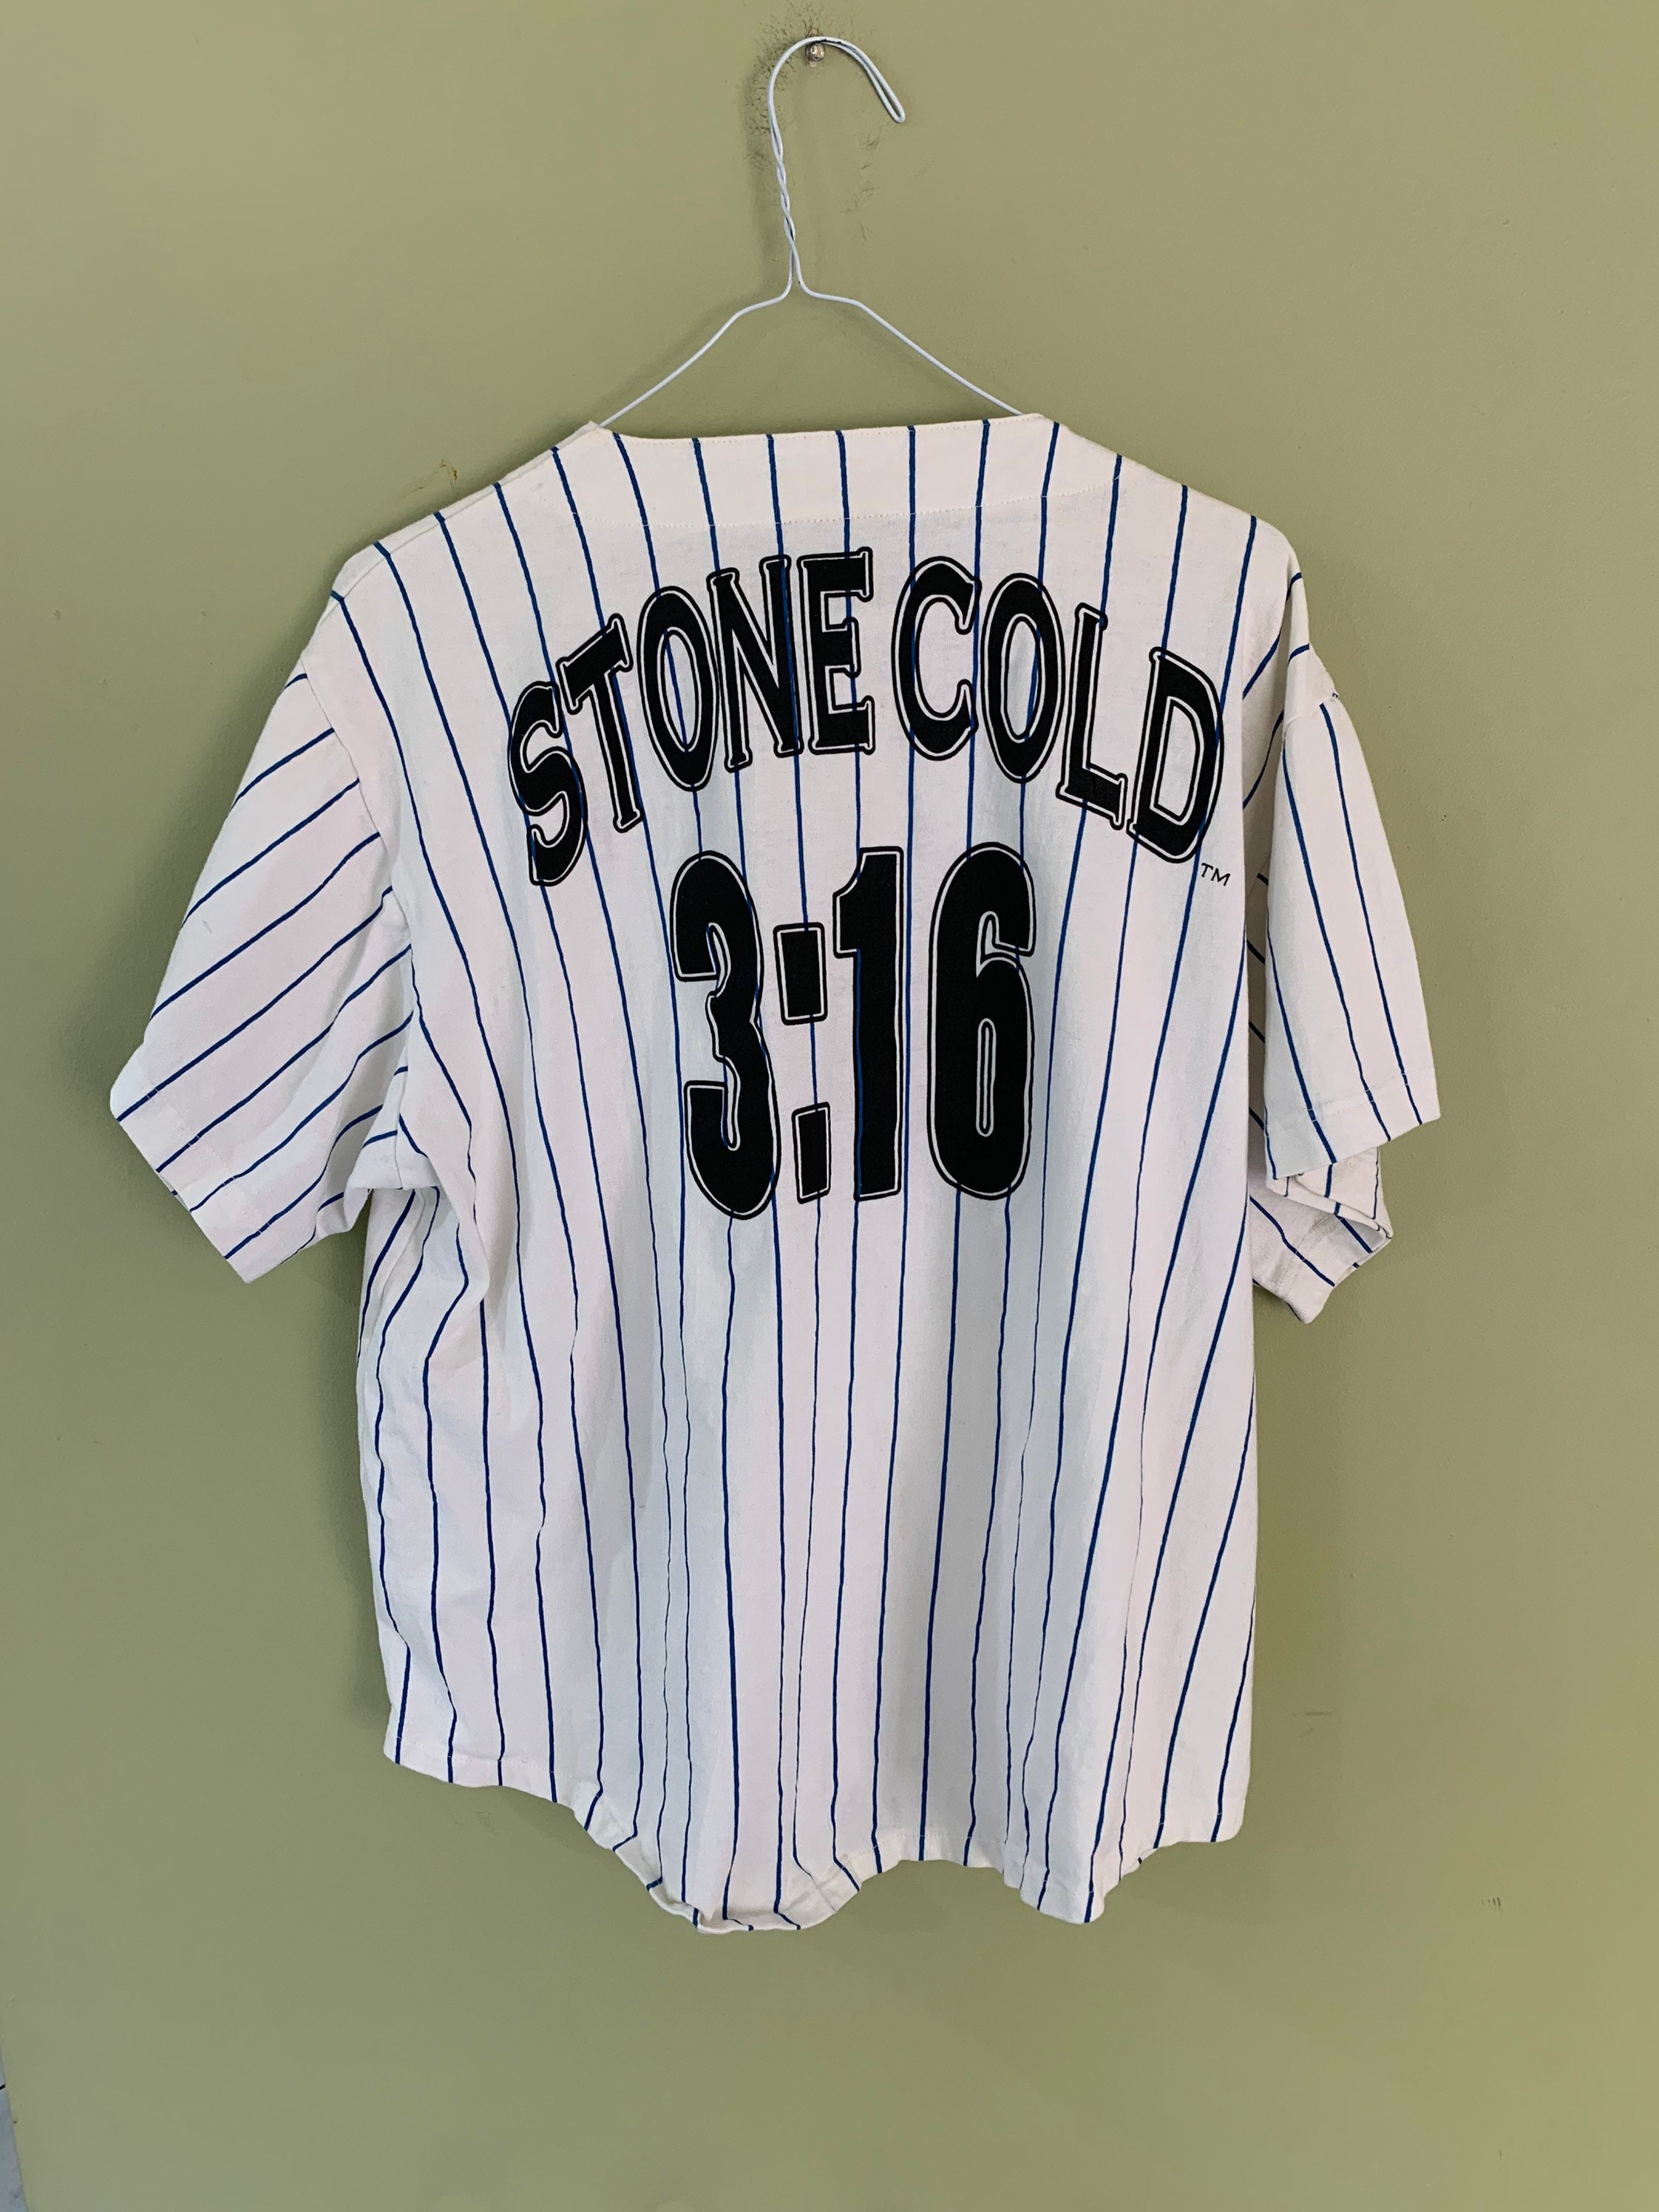 Vintage Stone Cold 3 16 Steve Austin Baseball Jersey Shirt